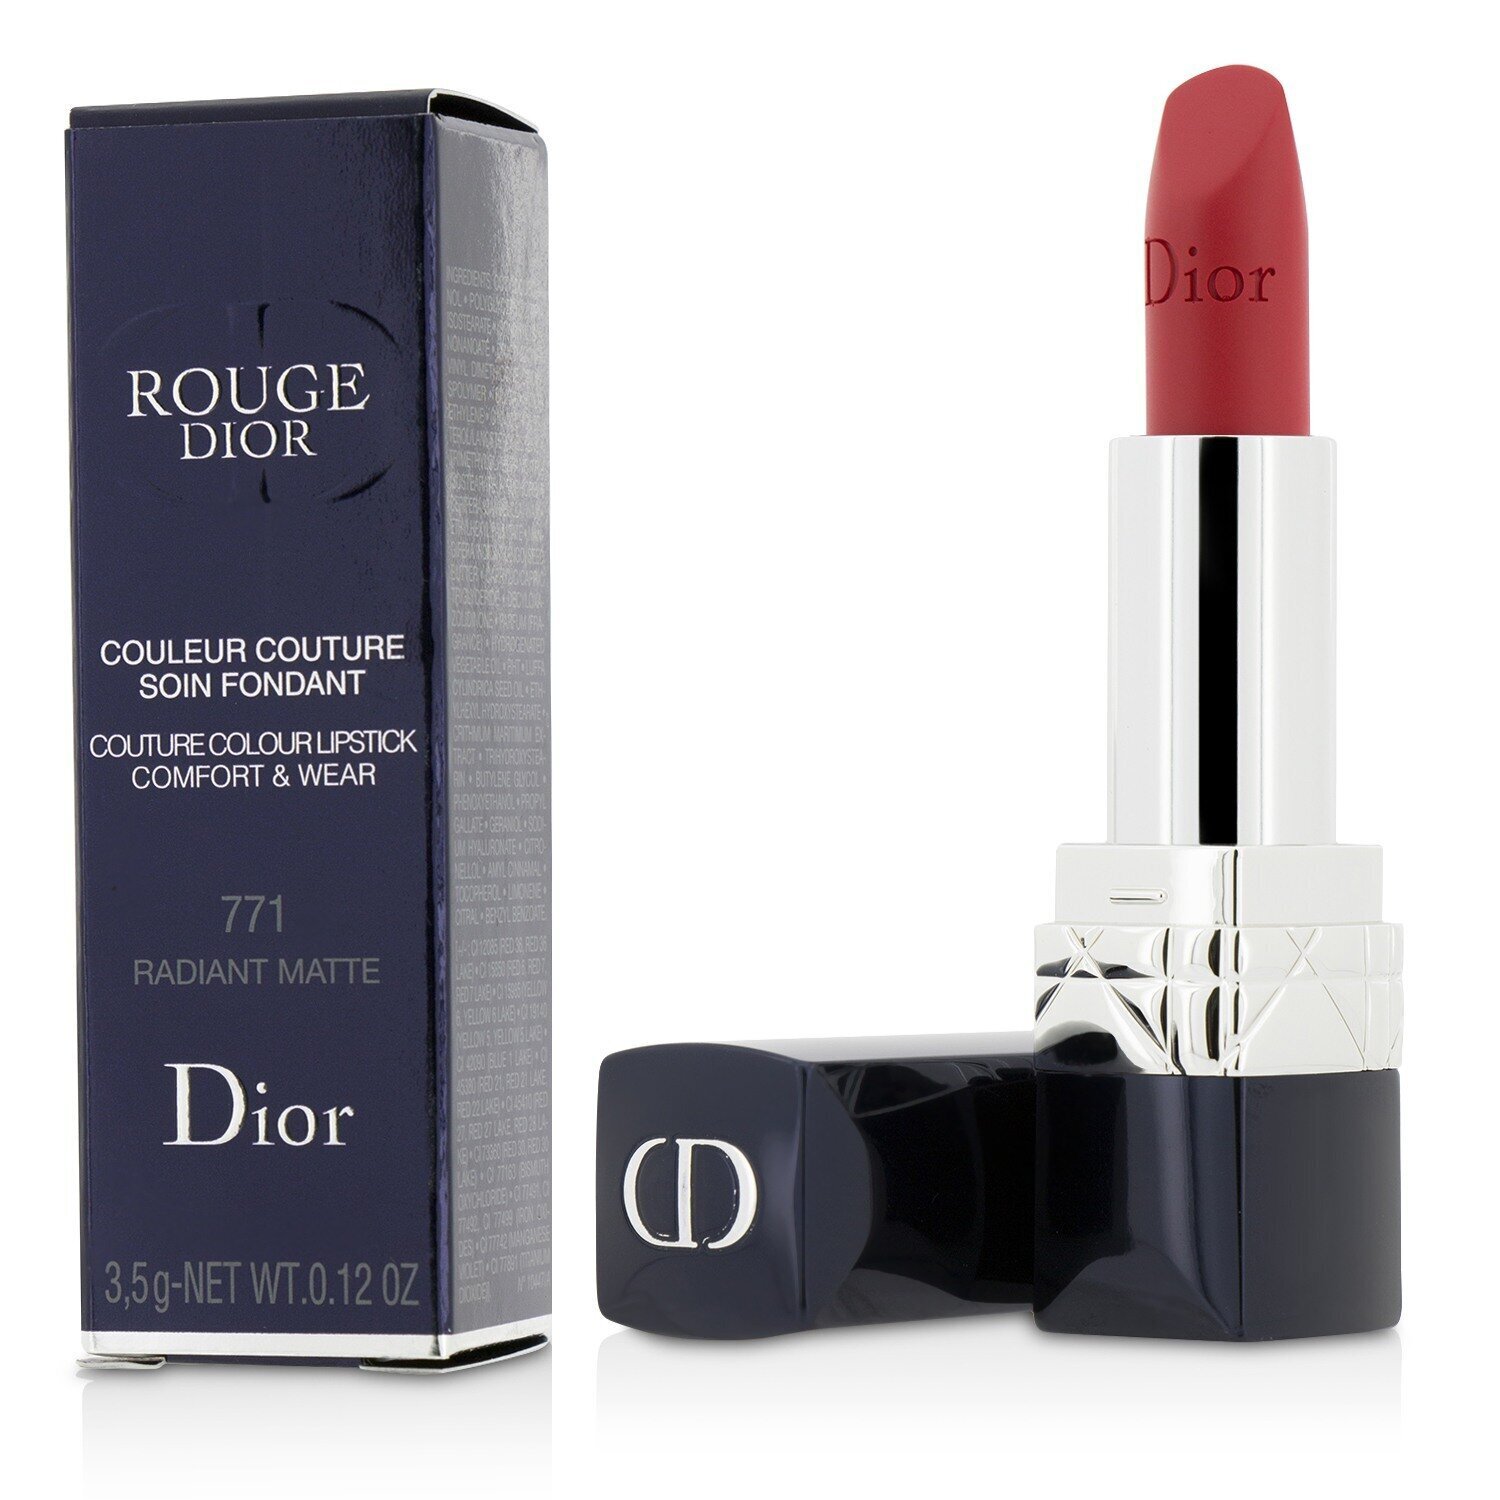 Dior包包官网 Lady Dior mini迪奥珊瑚红色顶级羊皮三格戴妃包17cm